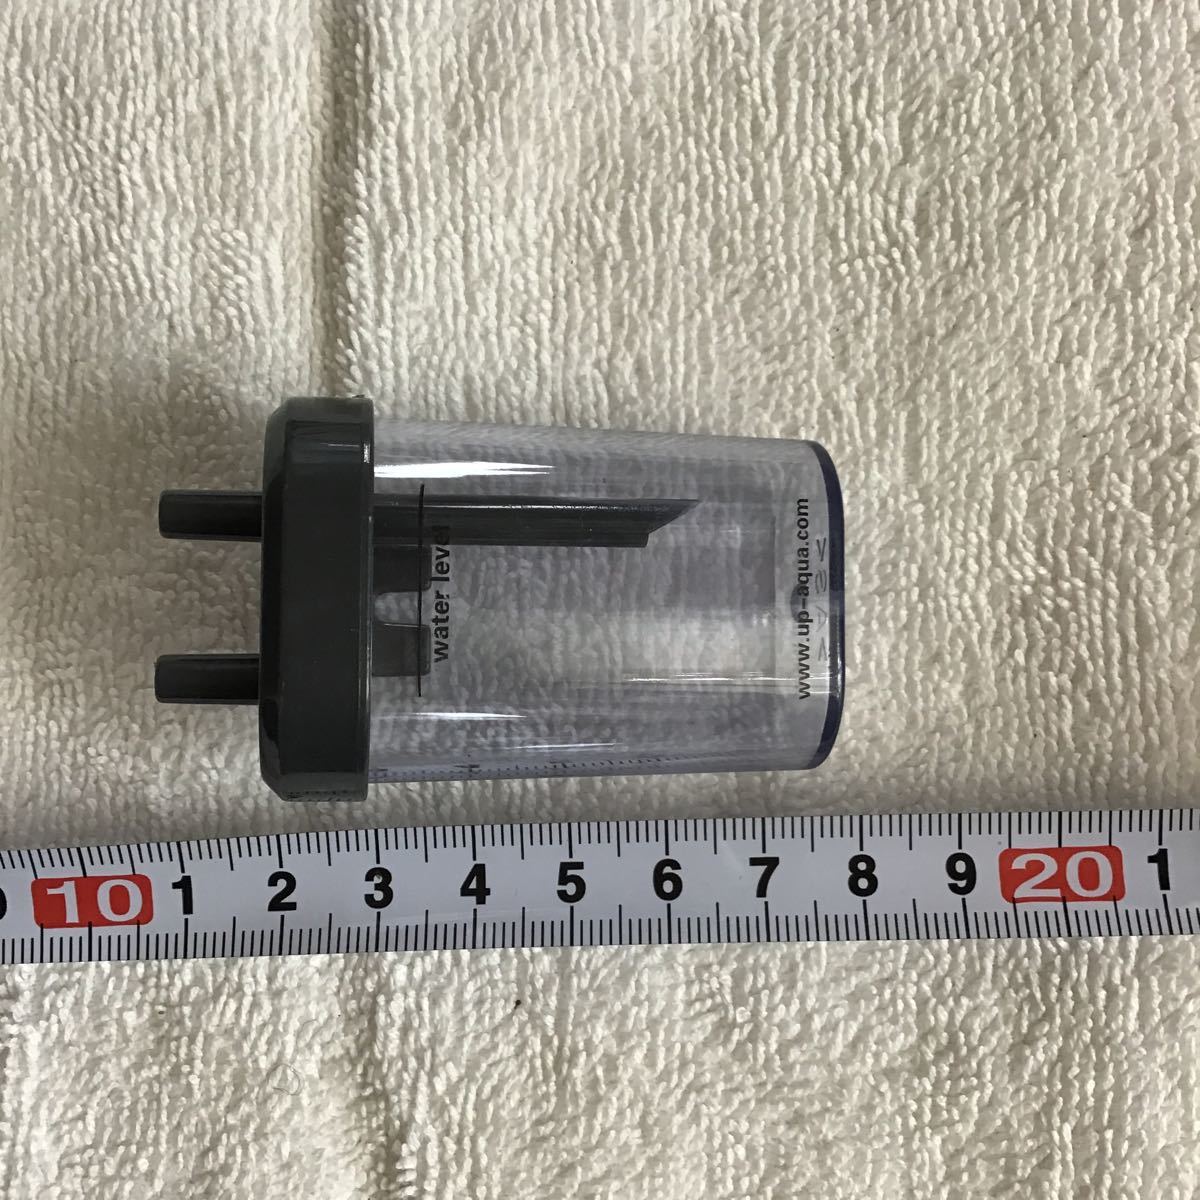 CO2 Mini Bubble счетчик вход модель D-518 ⑤246 маленький размер аквариум оптимальный . вход модель Bubble счетчик 4712304643246